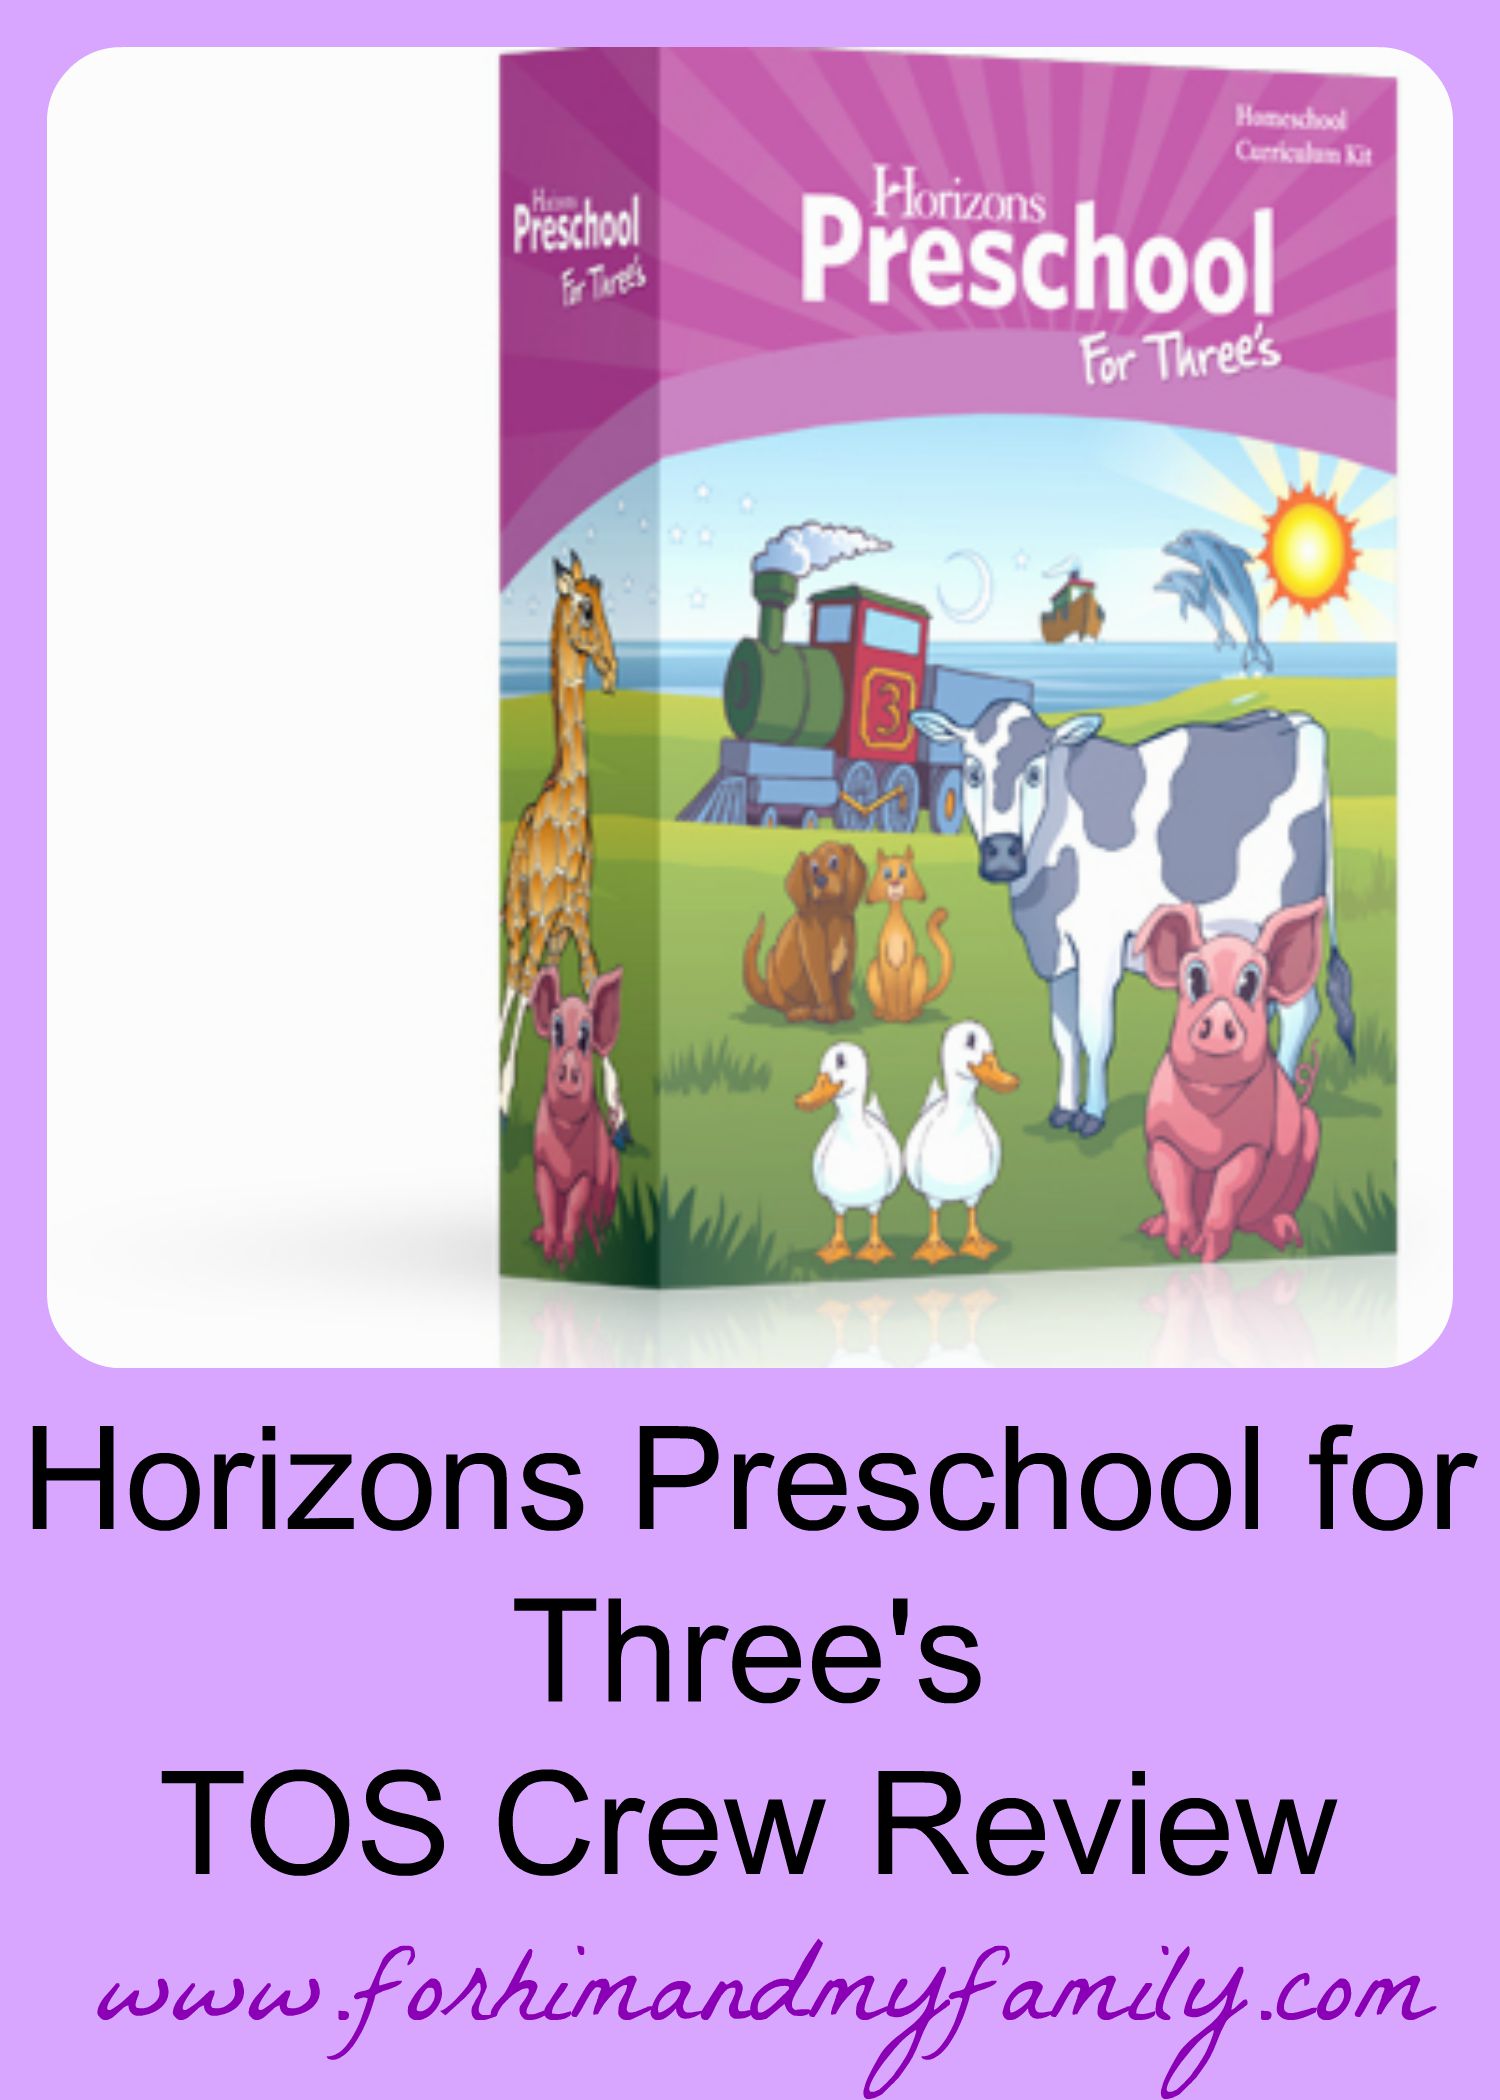 Preschool for Three's